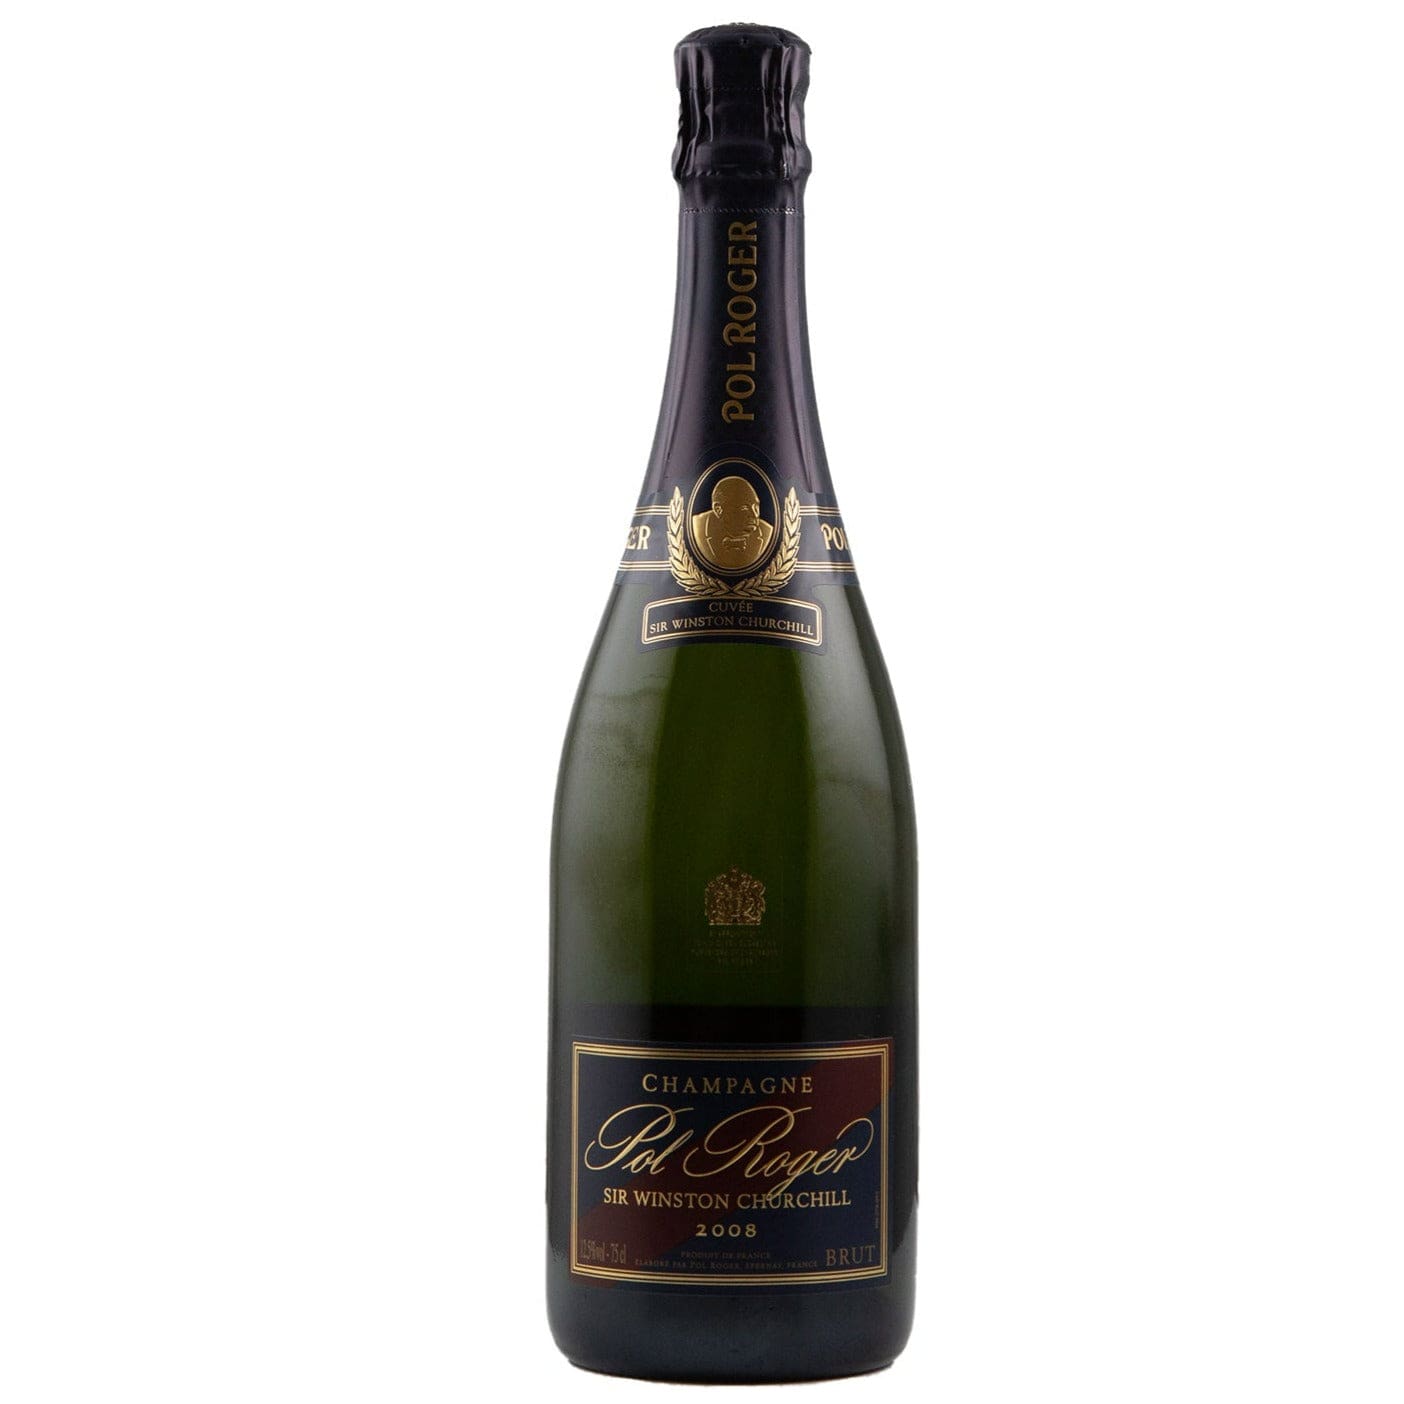 Single bottle of Sparkling wine Pol Roger, Cuvee Sir Winston Churchill Brut, Champagne, 2008 Pinot Noir and Chardonnay